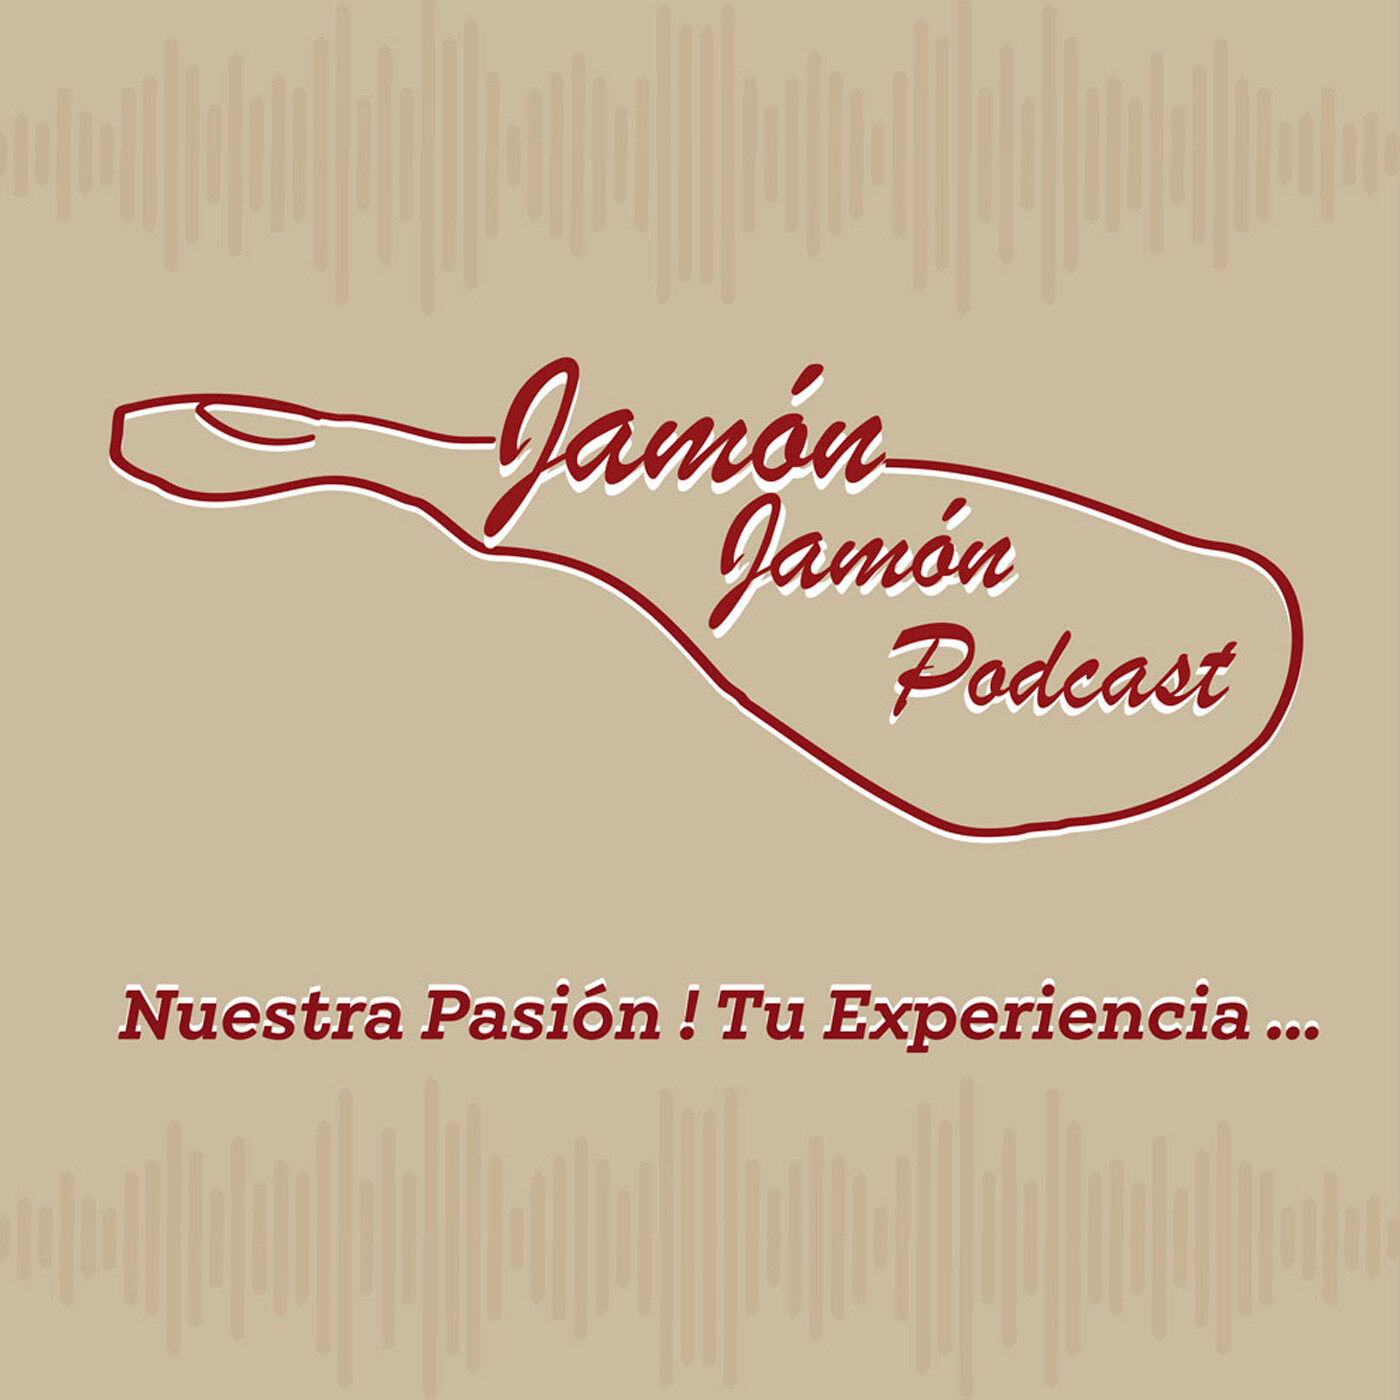 Jamón Jamón Podcast